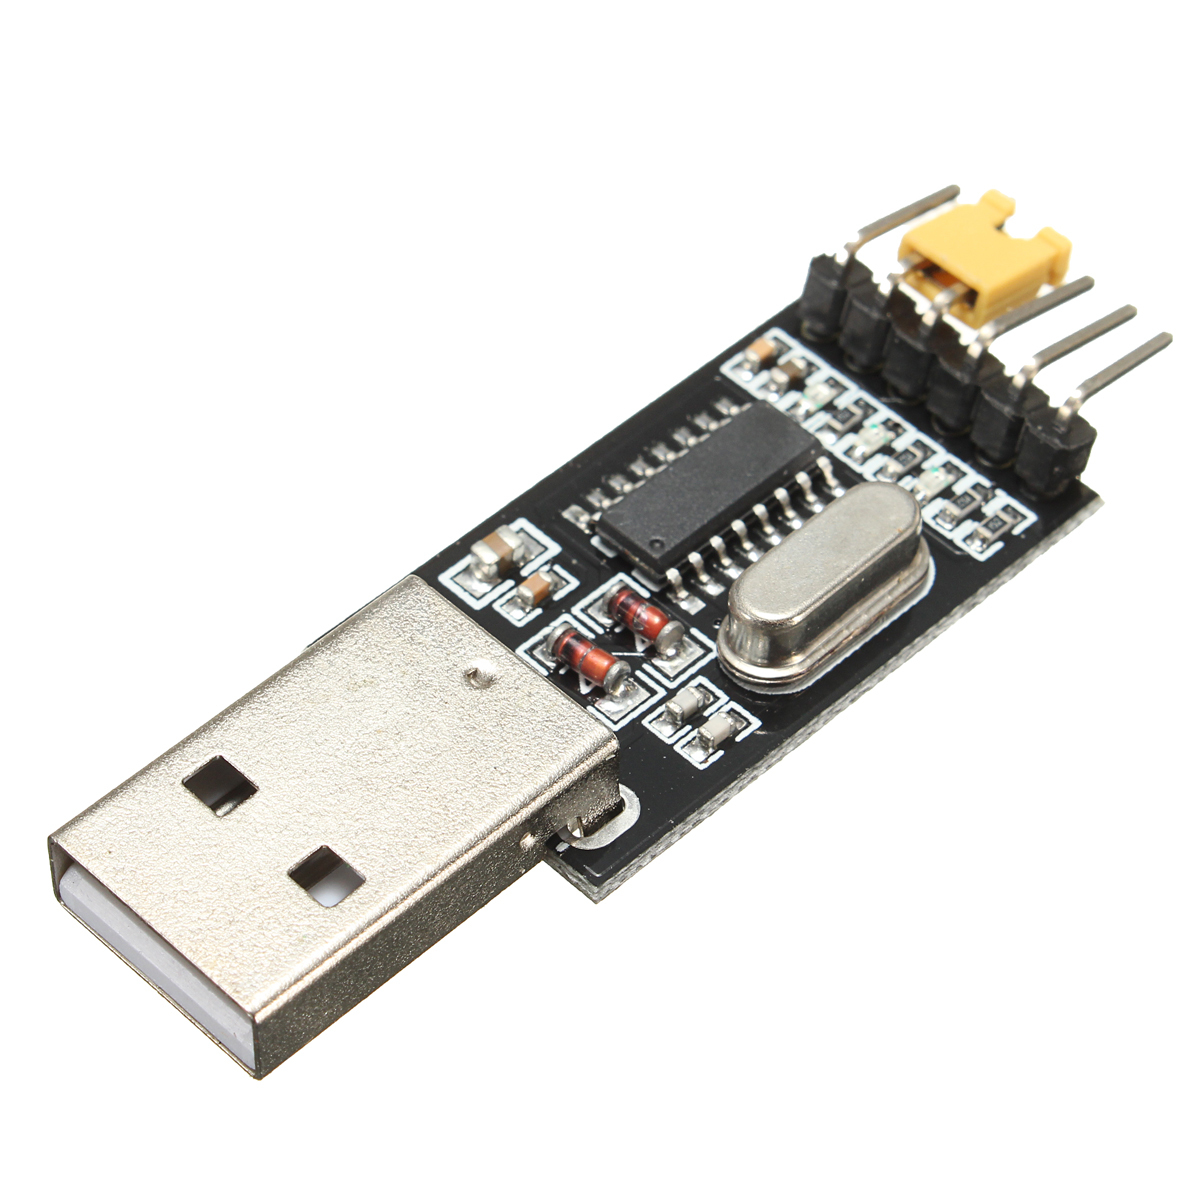 10pcs 3.3V 5V USB to TTL Converter CH340G UART Serial Adapter Module STC 2